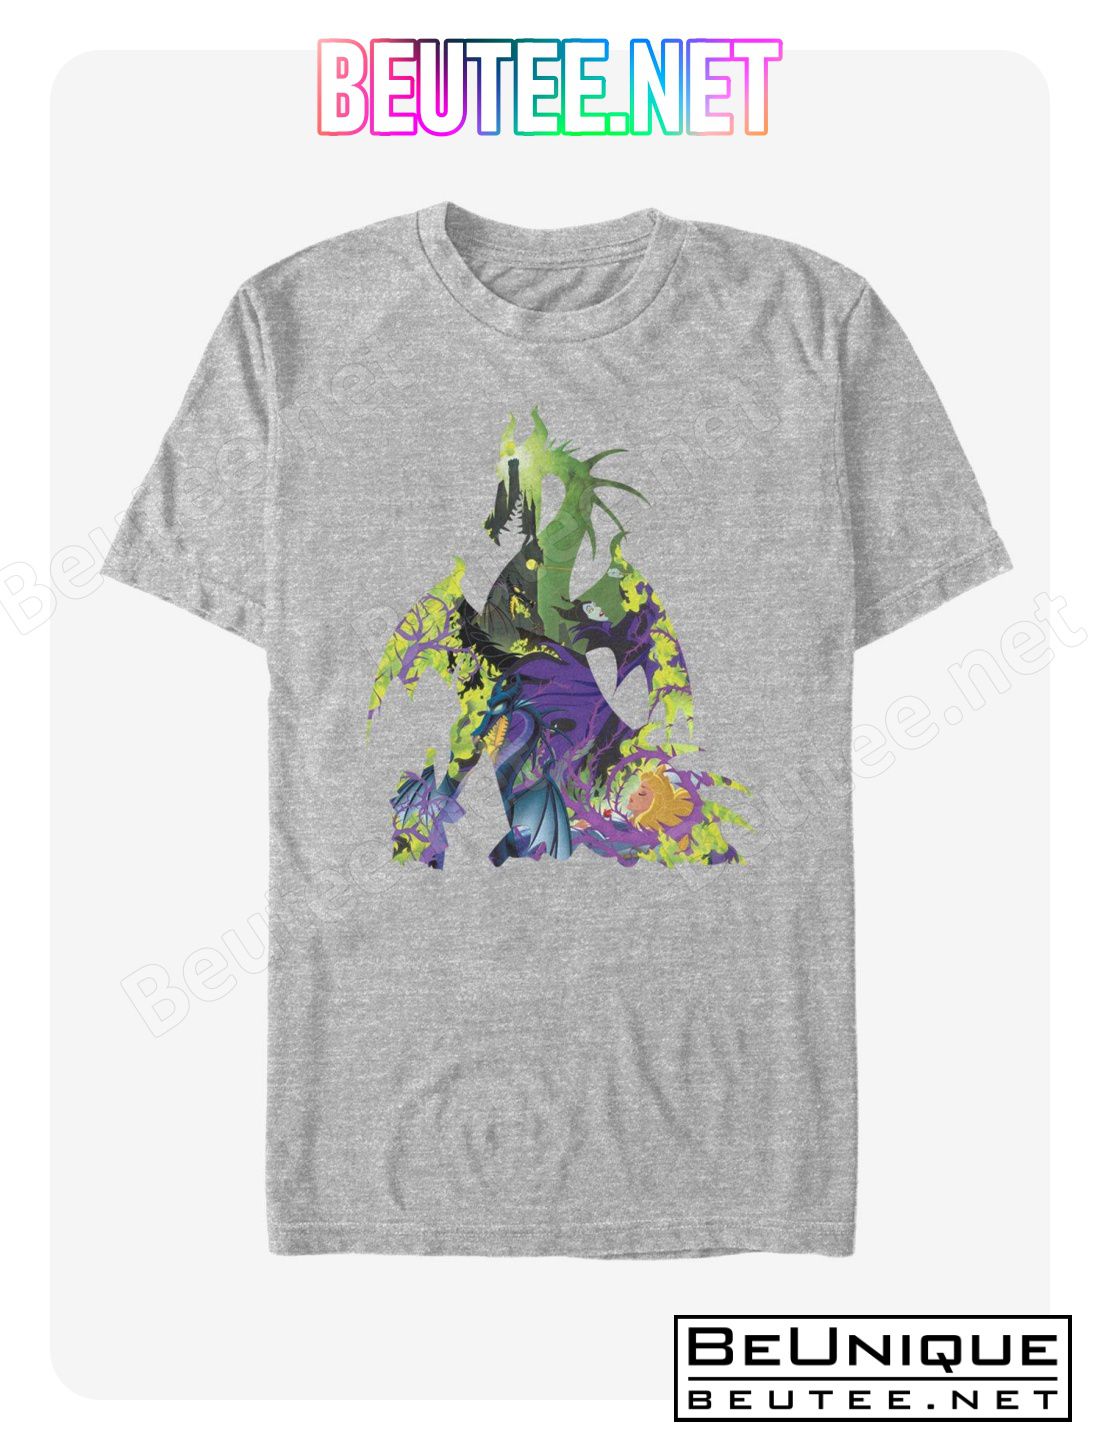 Disney Sleeping Beauty Dragon Form T-Shirt